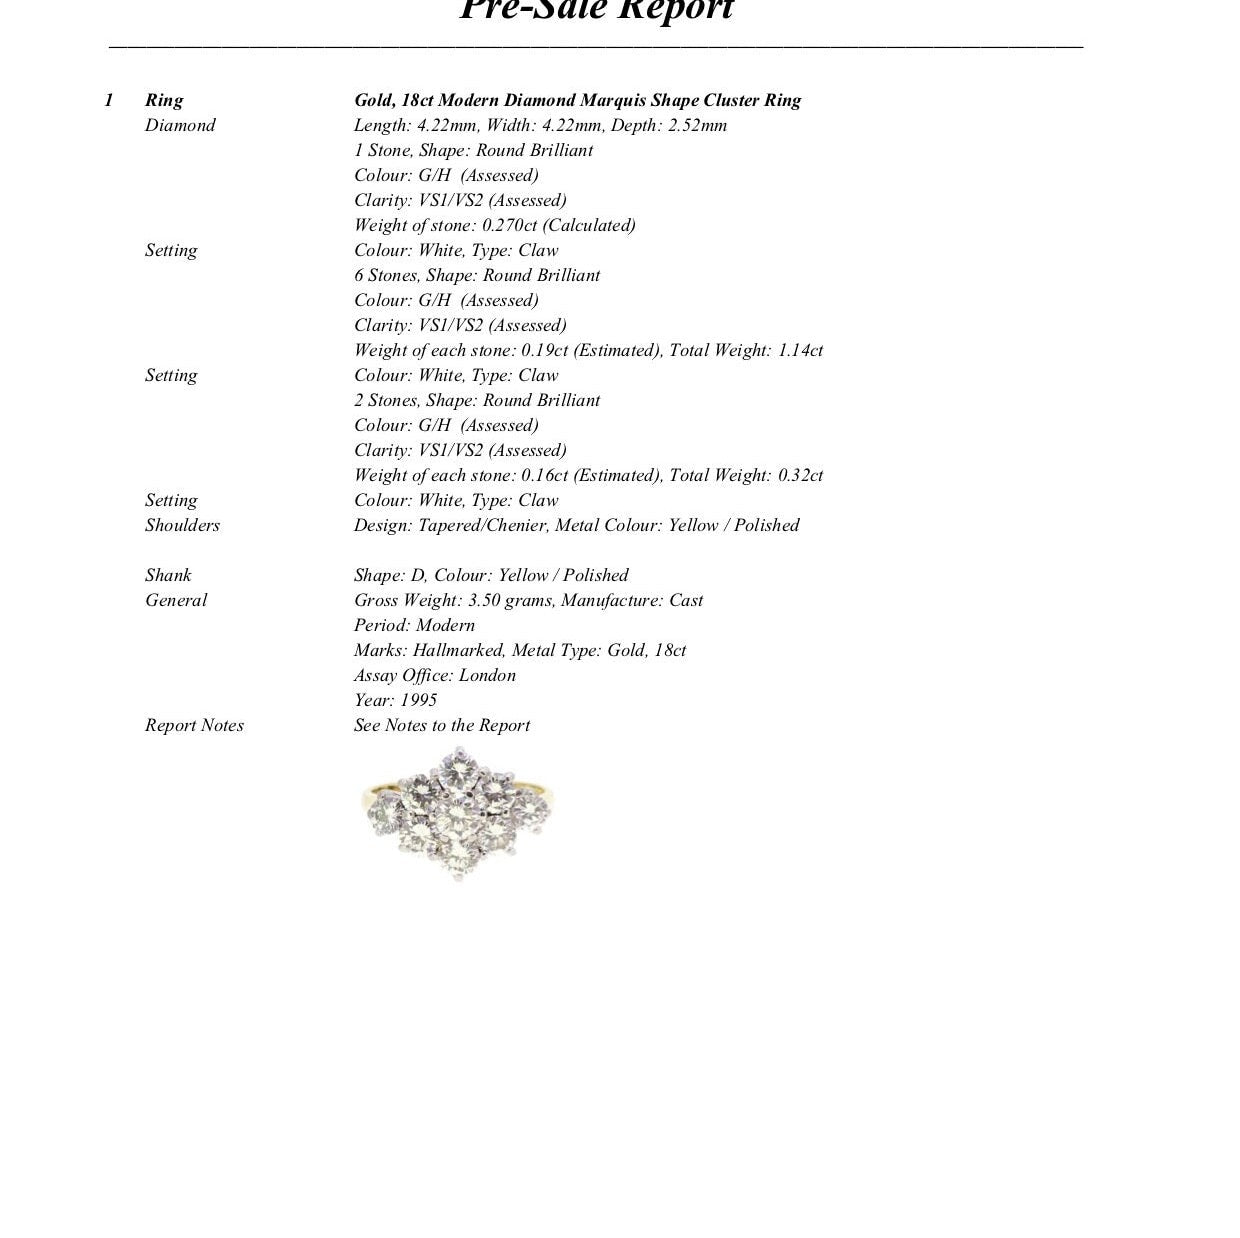 Stunning vintage 18ct gold diamond cluster engagement ring 1.73 carat ~ Independent Valuation